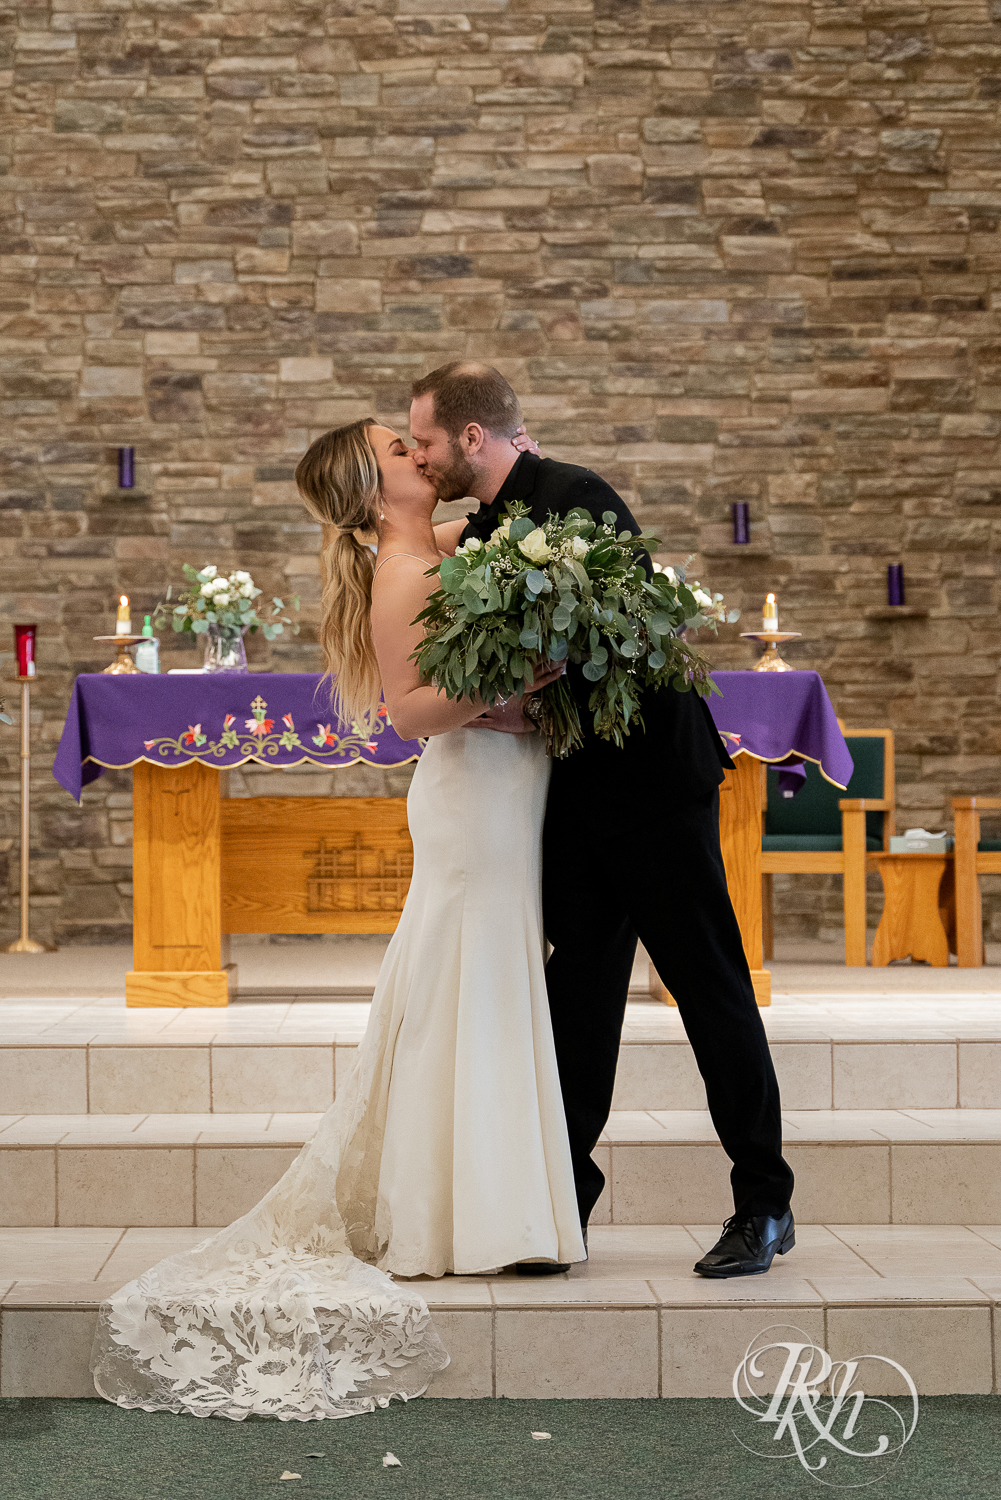 Bride and groom kiss in church wedding ceremony in Faribault, Minnesota.